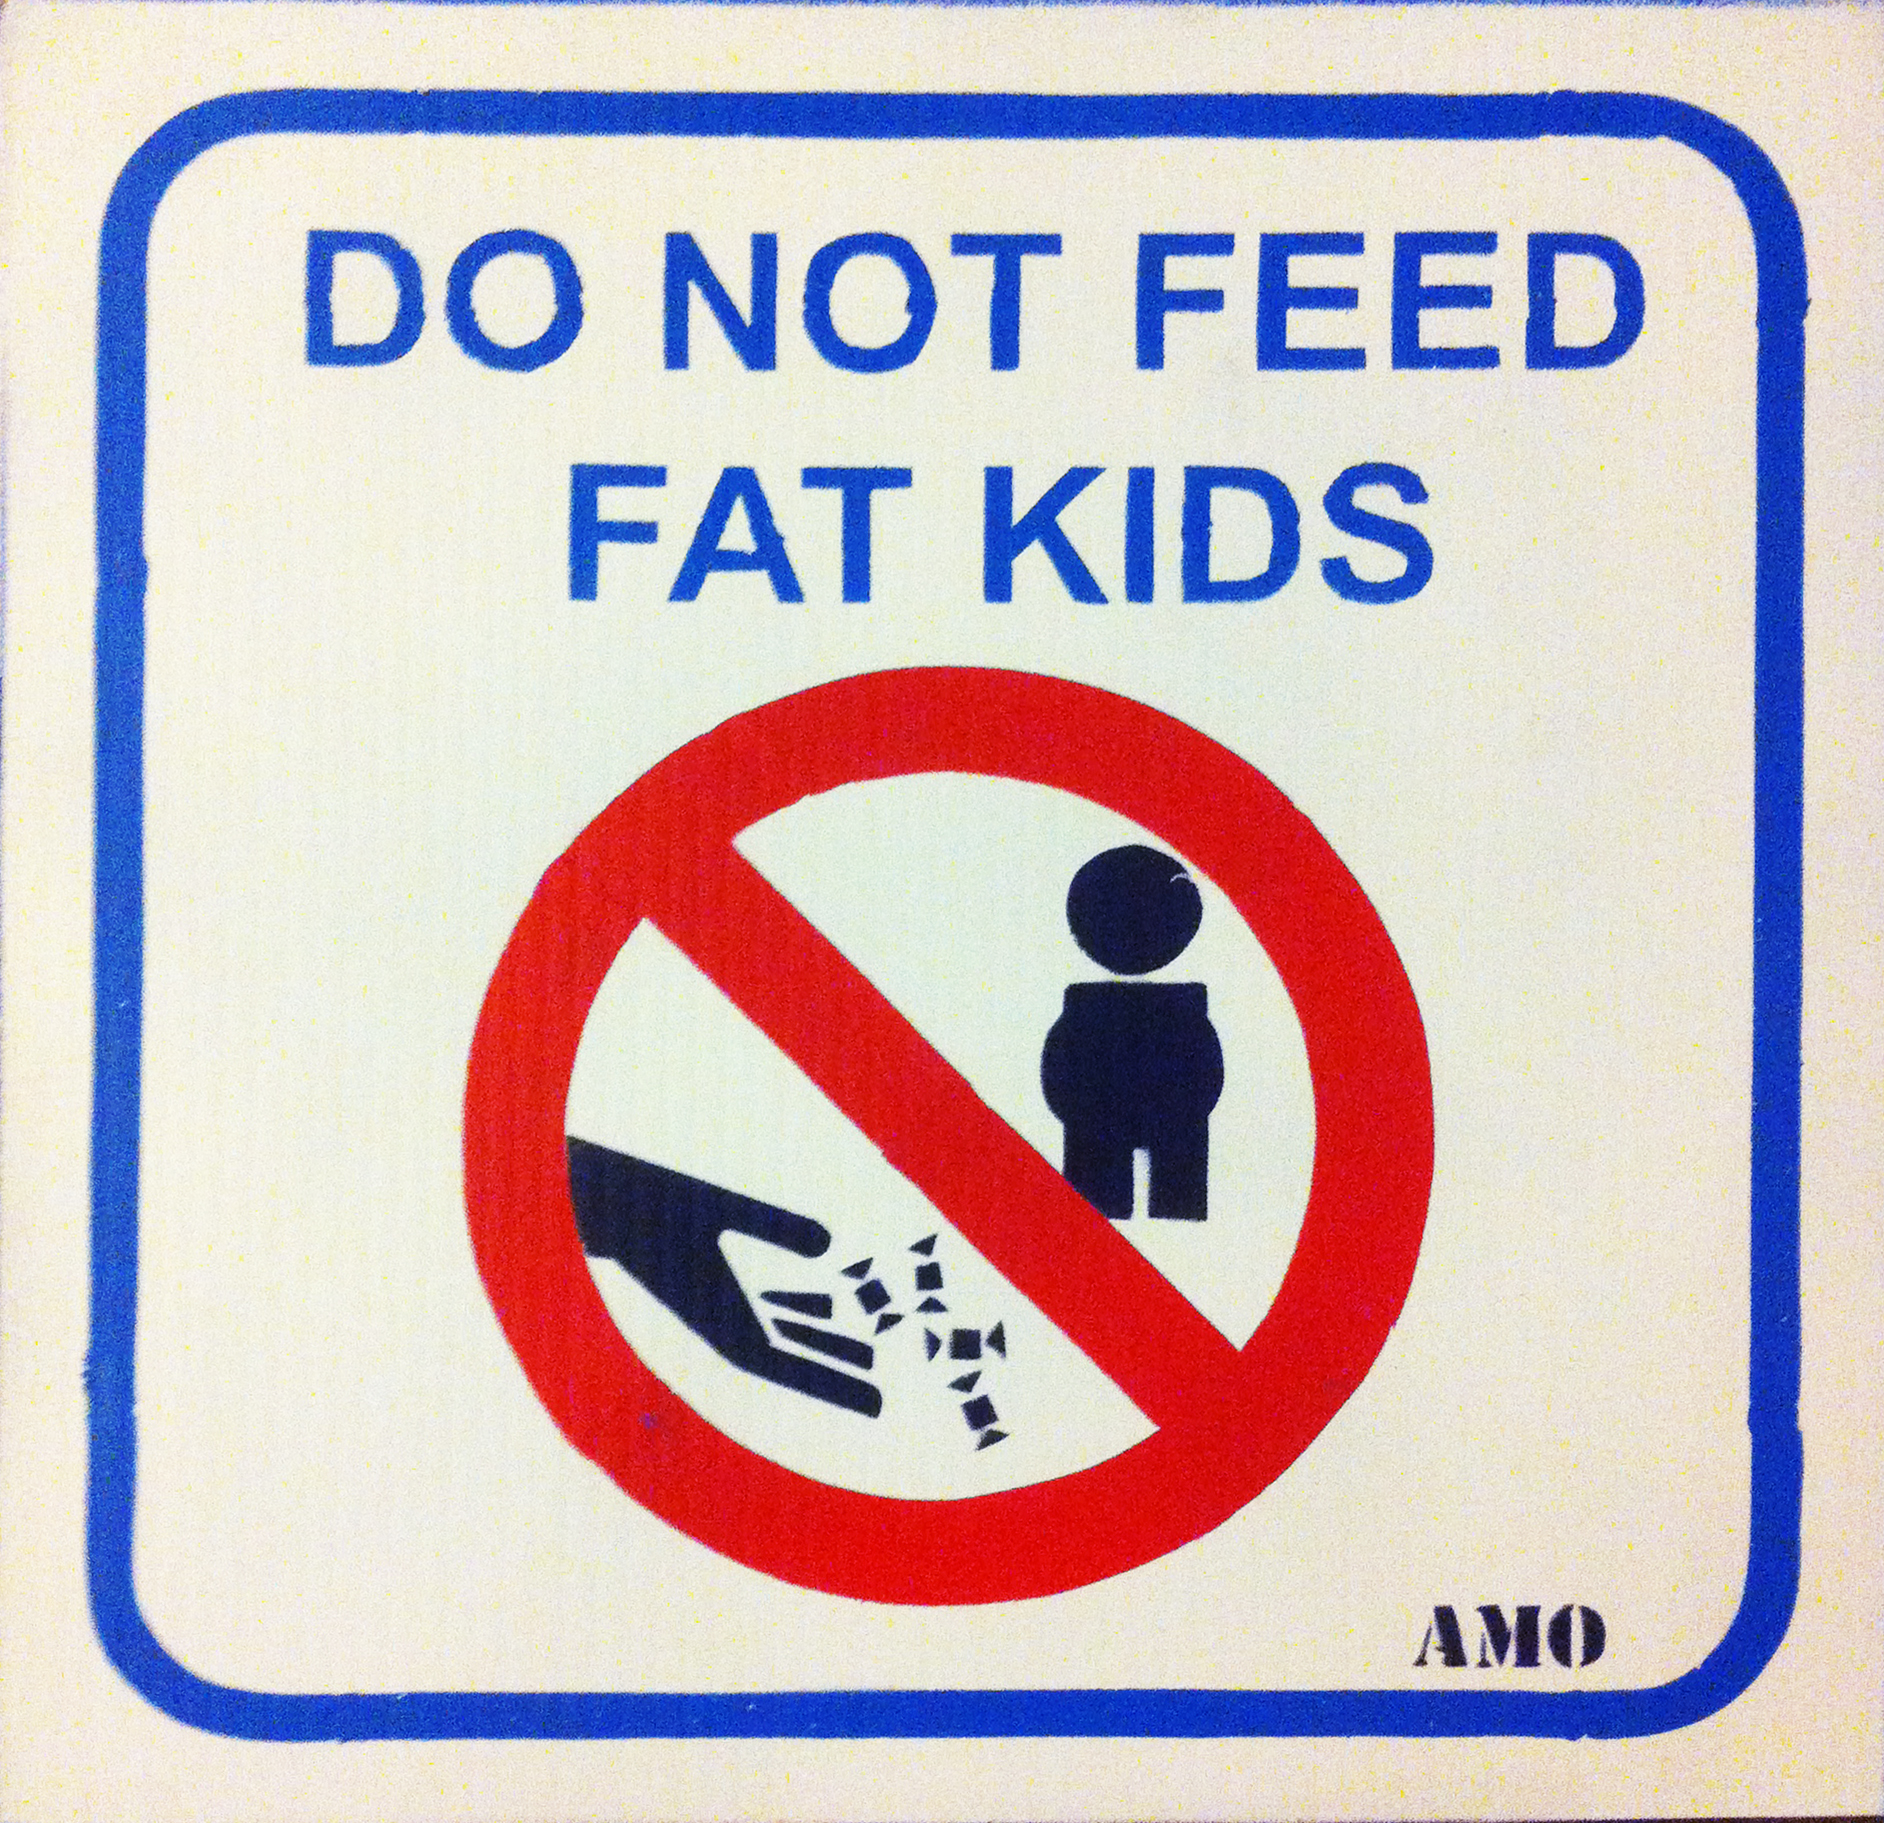 Do not feed fat kids